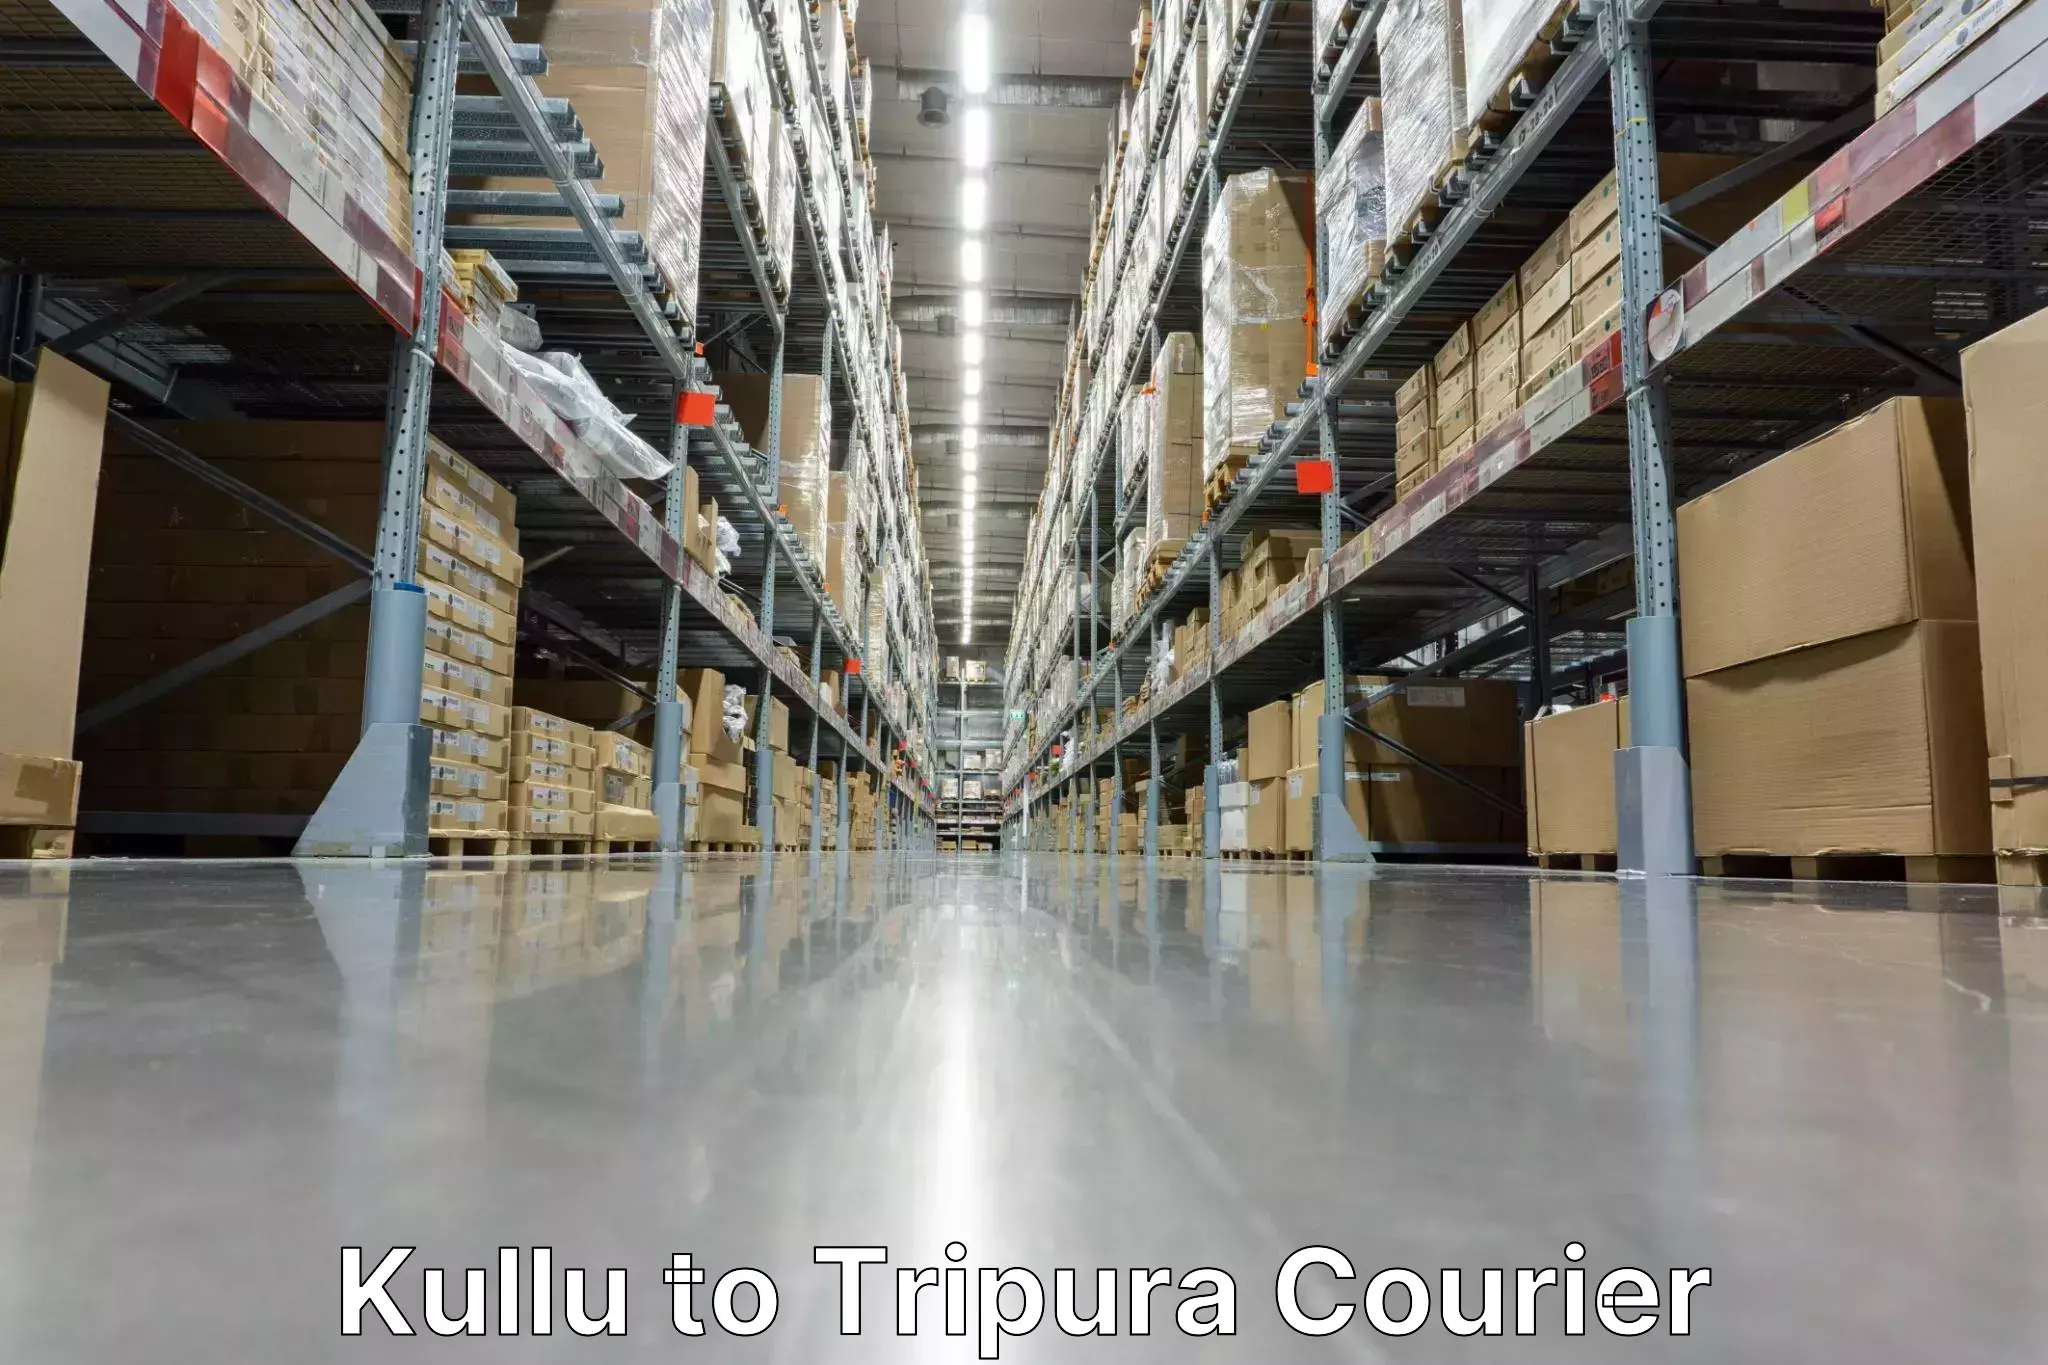 Courier service comparison Kullu to Udaipur Tripura